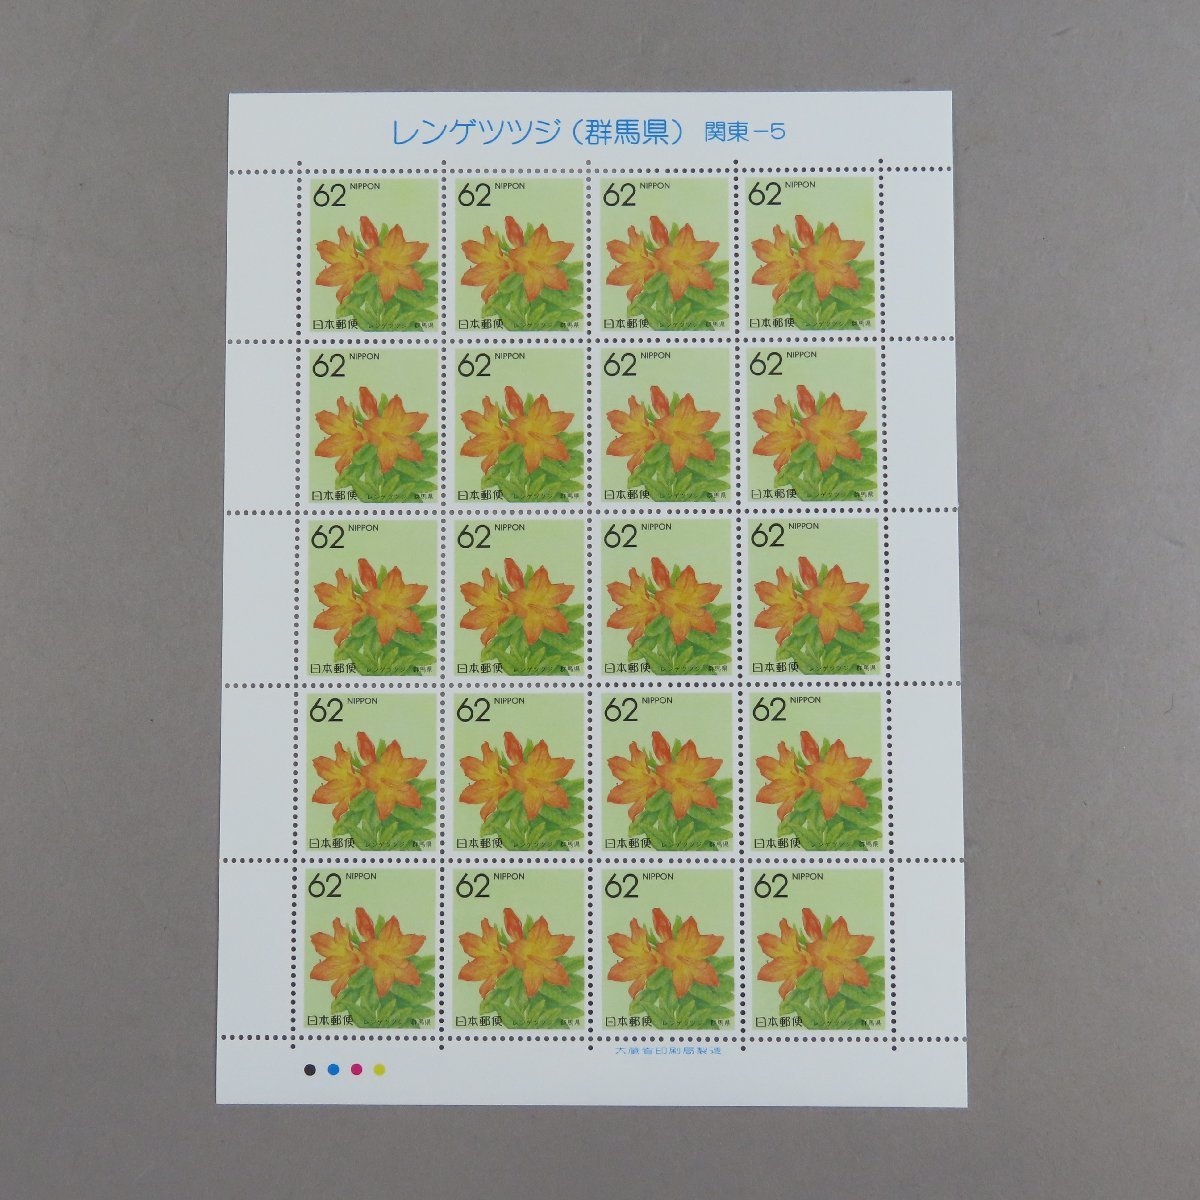 [ stamp 1623] prefectures flower Furusato Stamp Chinese milk vetch azalea ( Gunma prefecture ) Kanto -5 62 jpy 20 surface 1 seat 